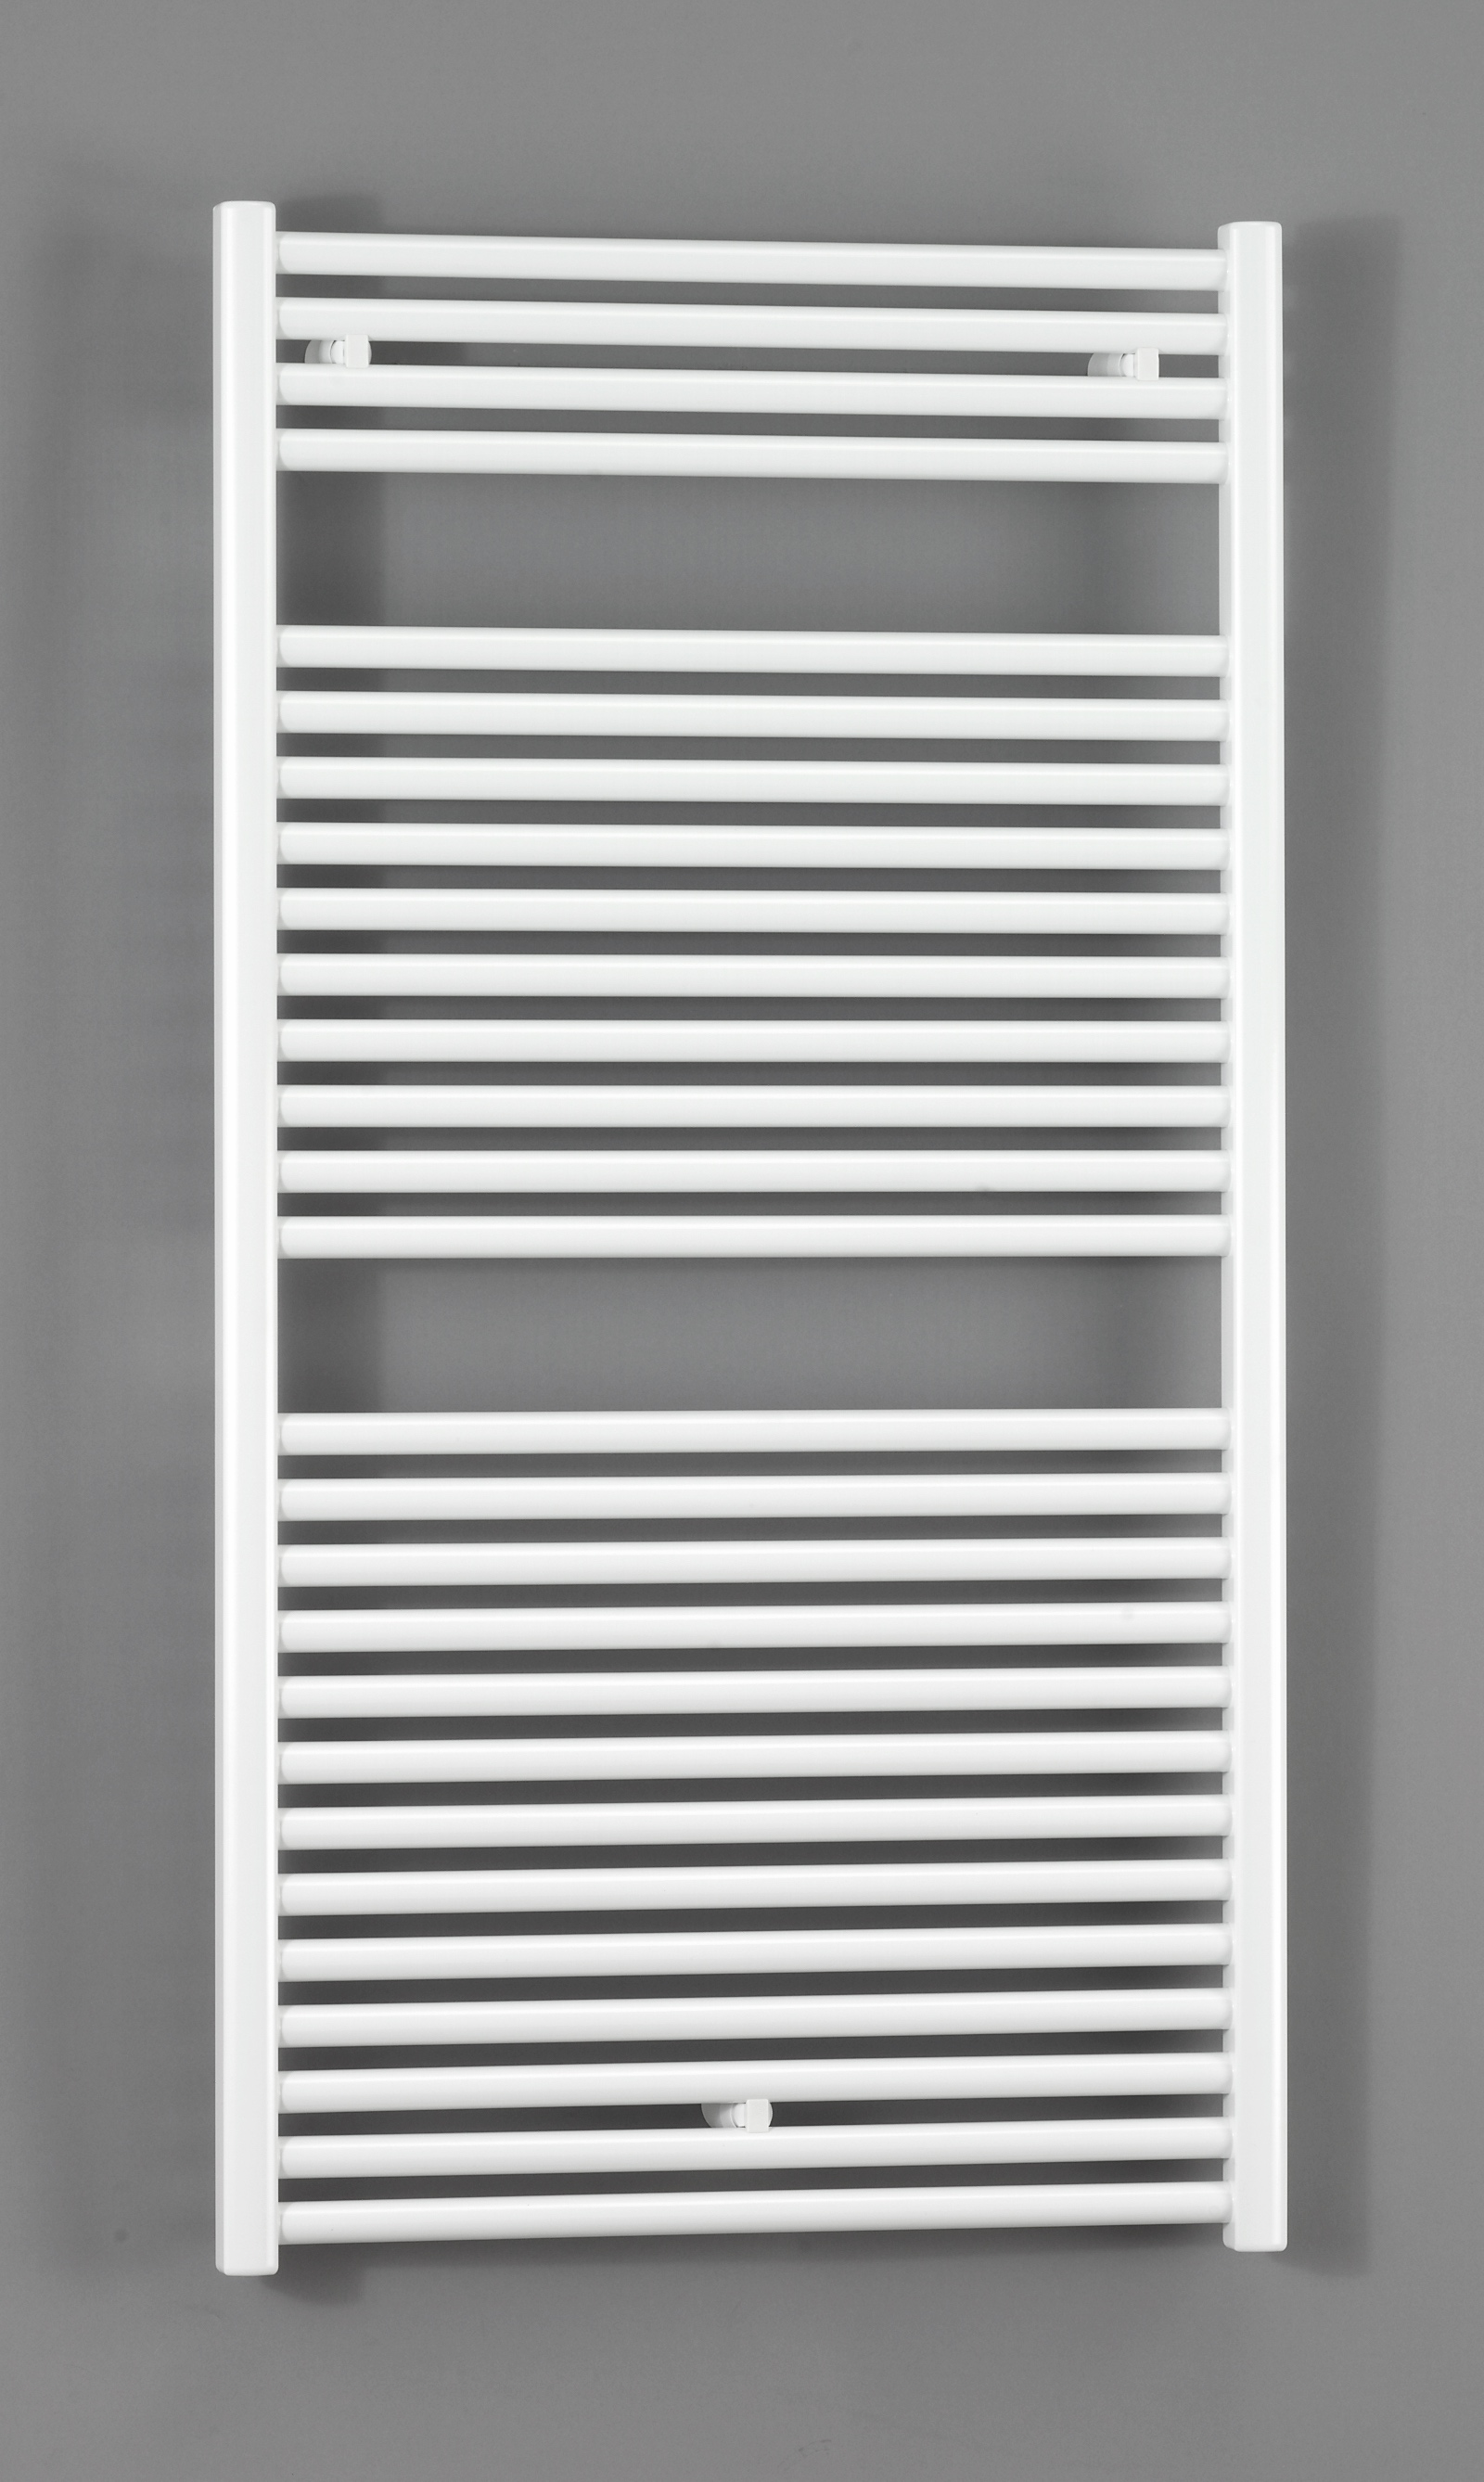 Zehnder Design-Elektroheizkörper „Toga“ 50 × 114,8 cm in Verkehrsweiß (RAL 9016, glänzend)